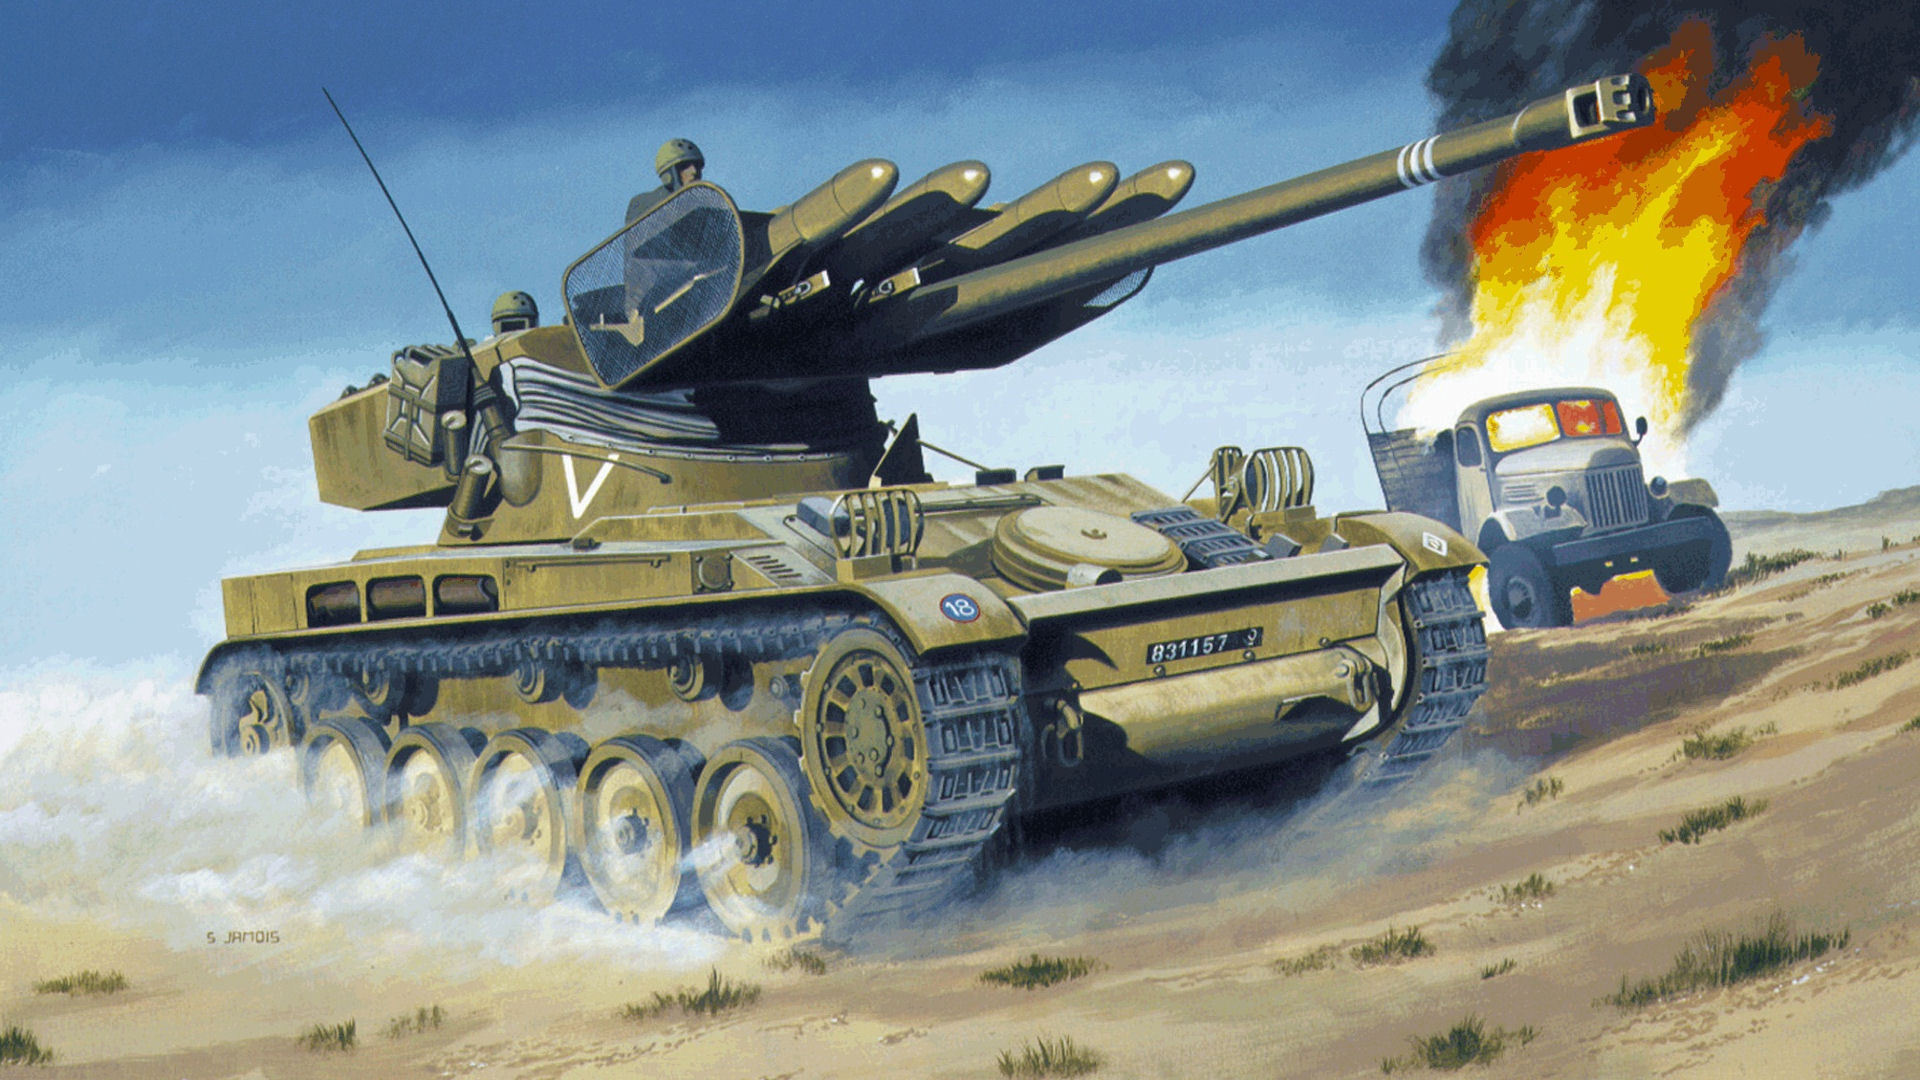 амх-13, пустыня, грузовик, птур ss-11, рисунок, танк